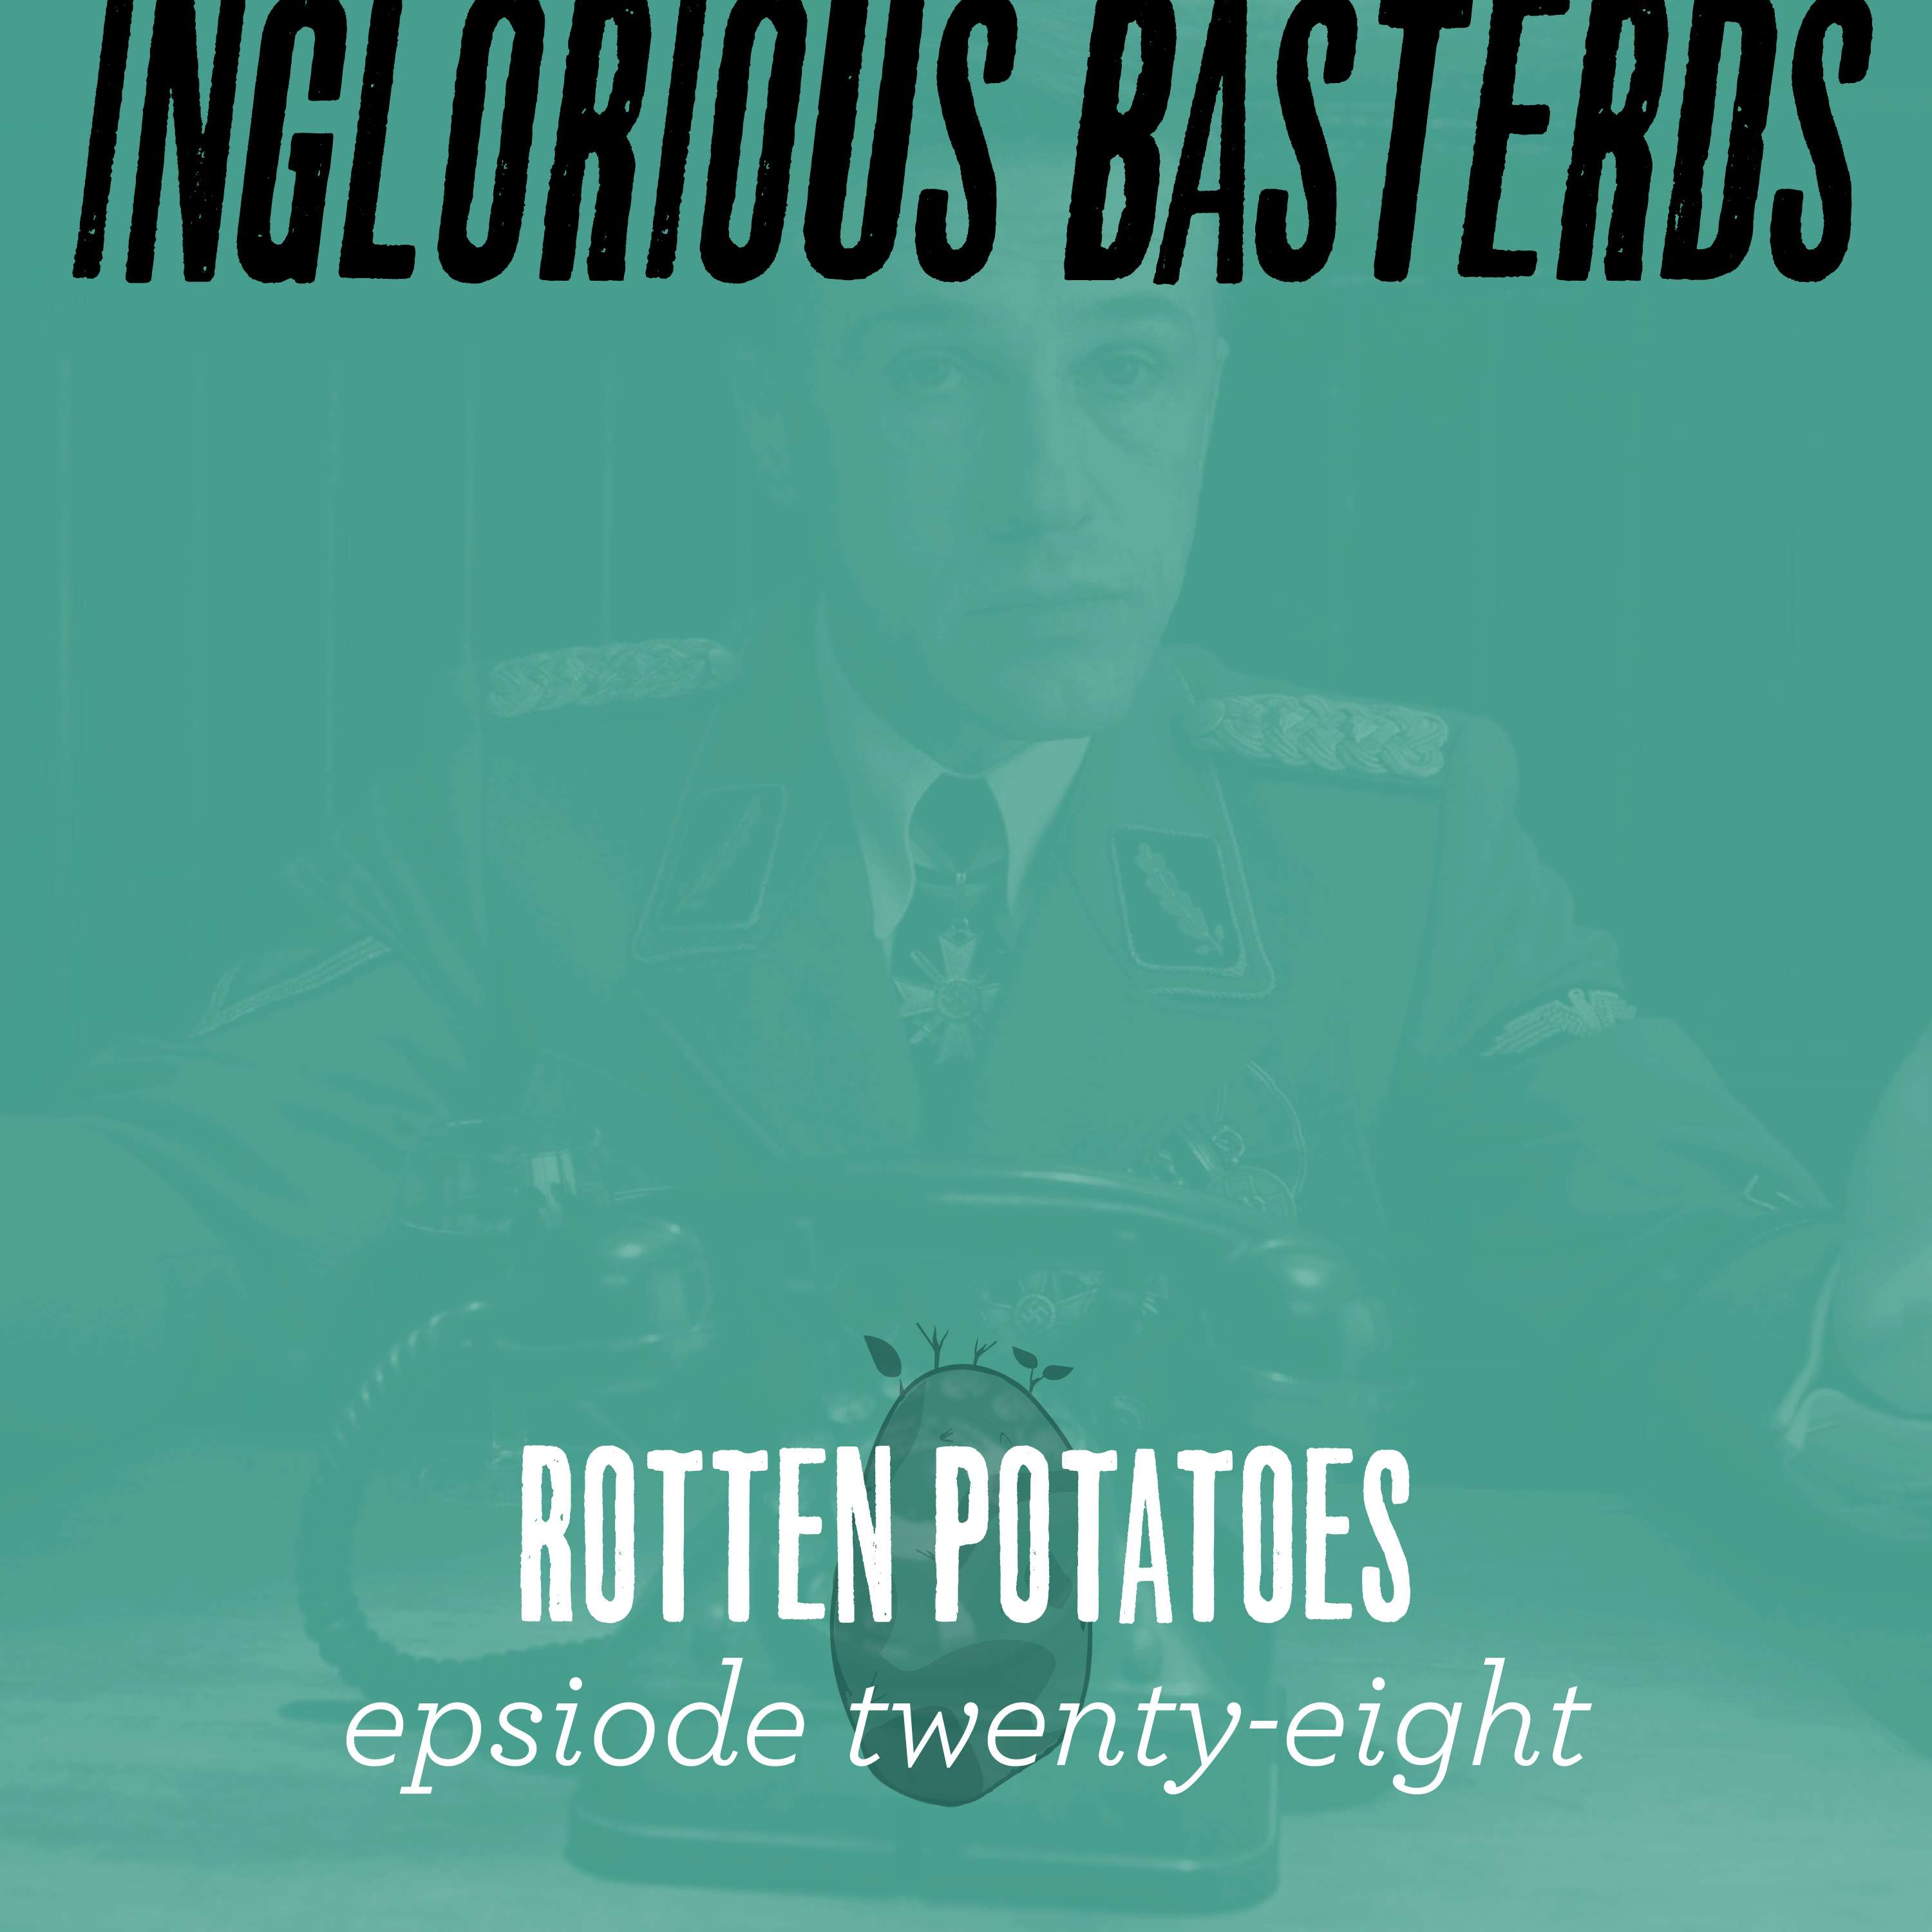 Ep 28: Inglorious Basterds